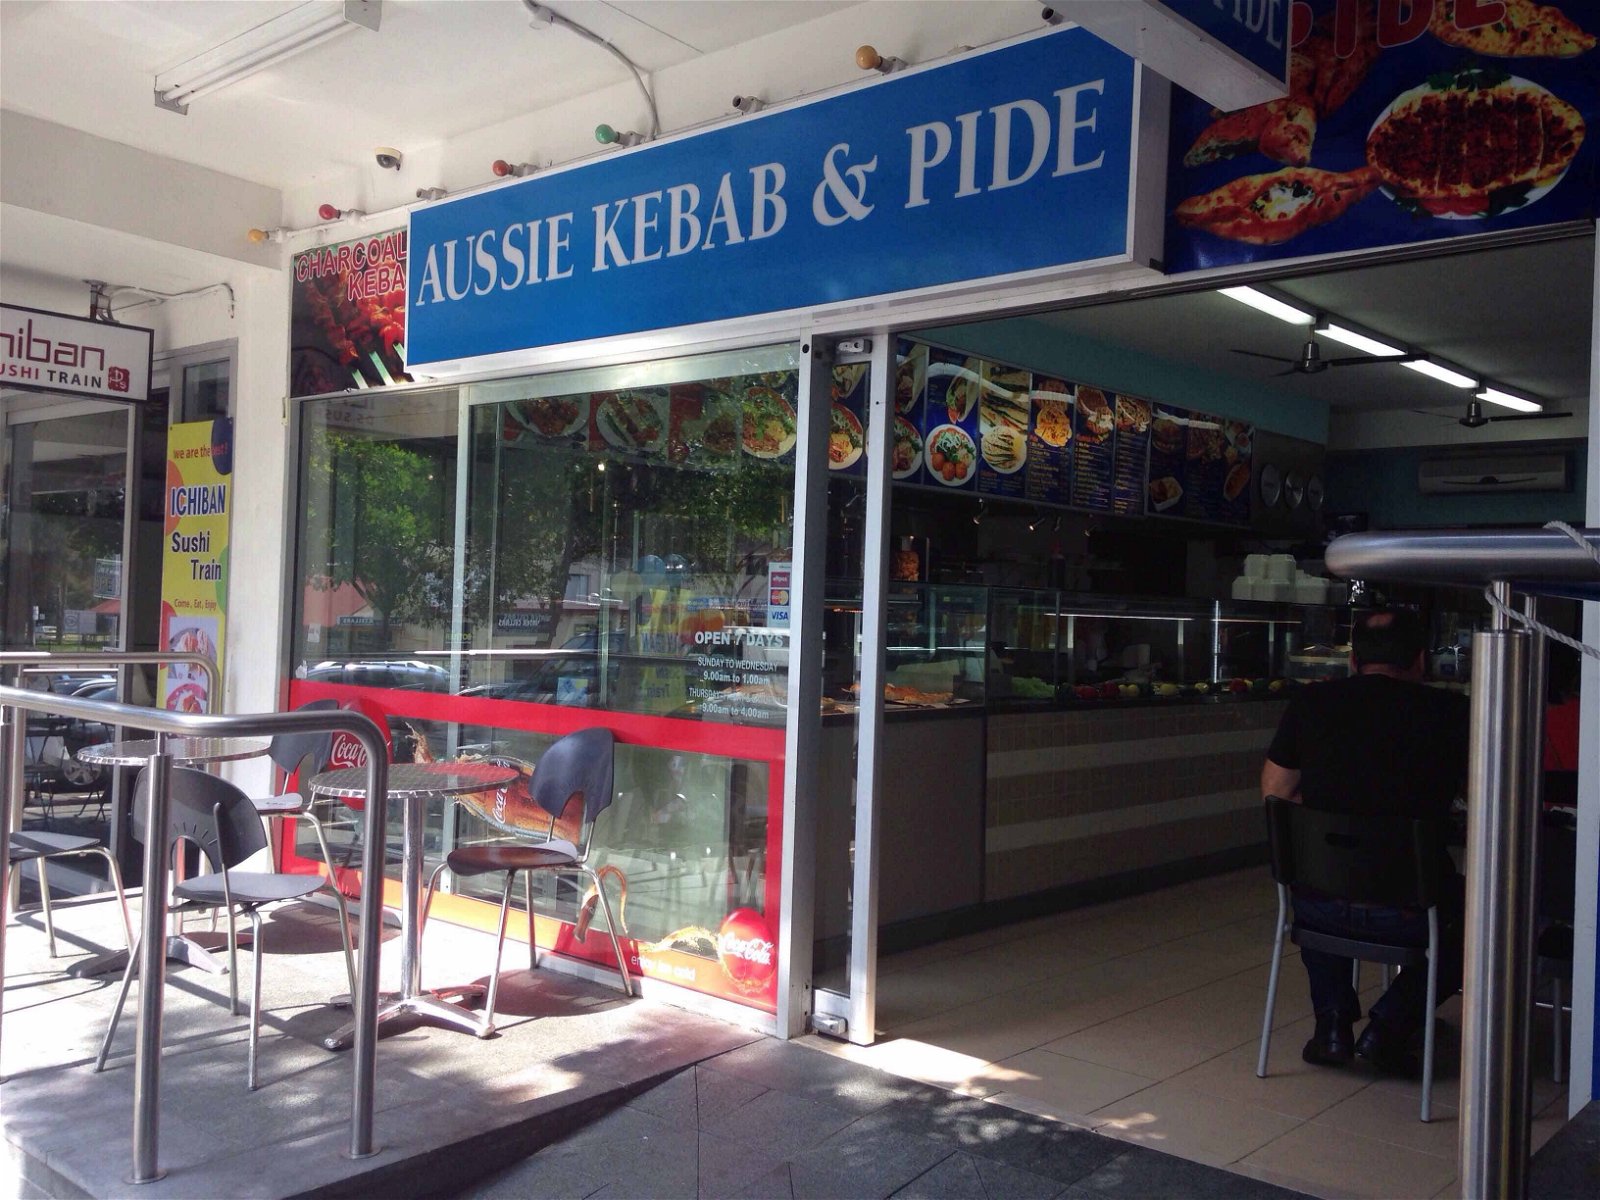 Aussie Kebab  Pide - Surfers Paradise Gold Coast